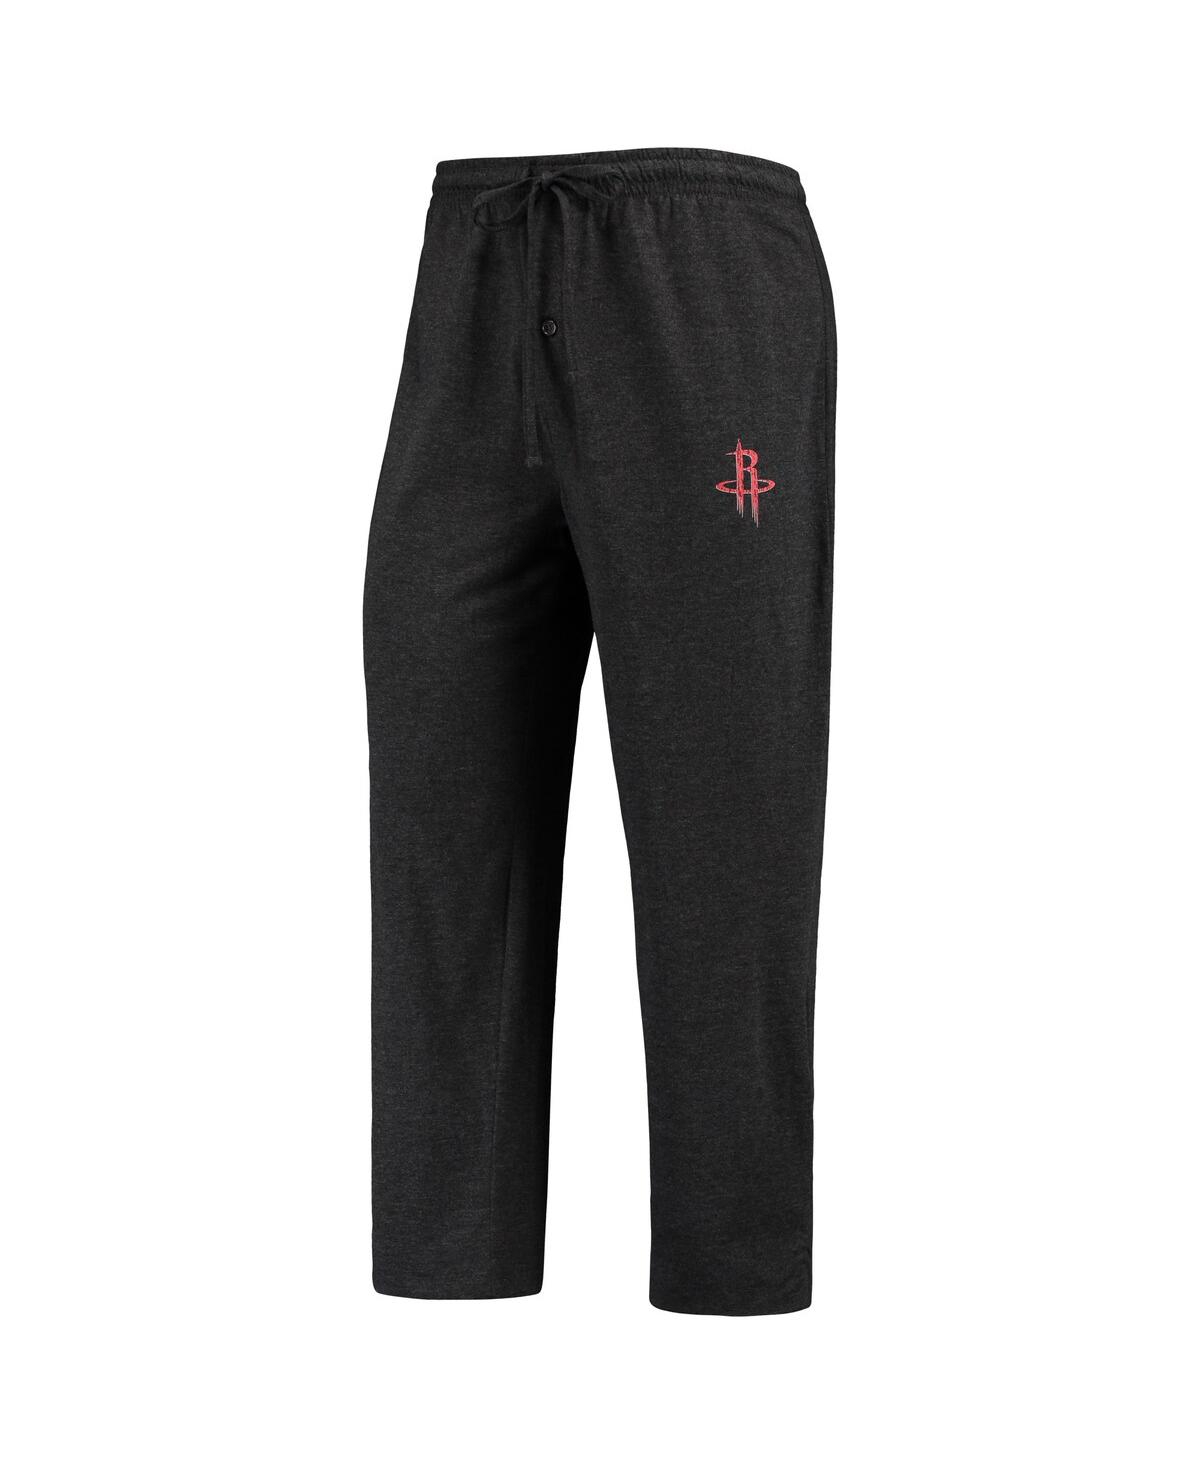 Men's Houston Rockets Concepts Sports Gray Long-Sleeve T-Shirt